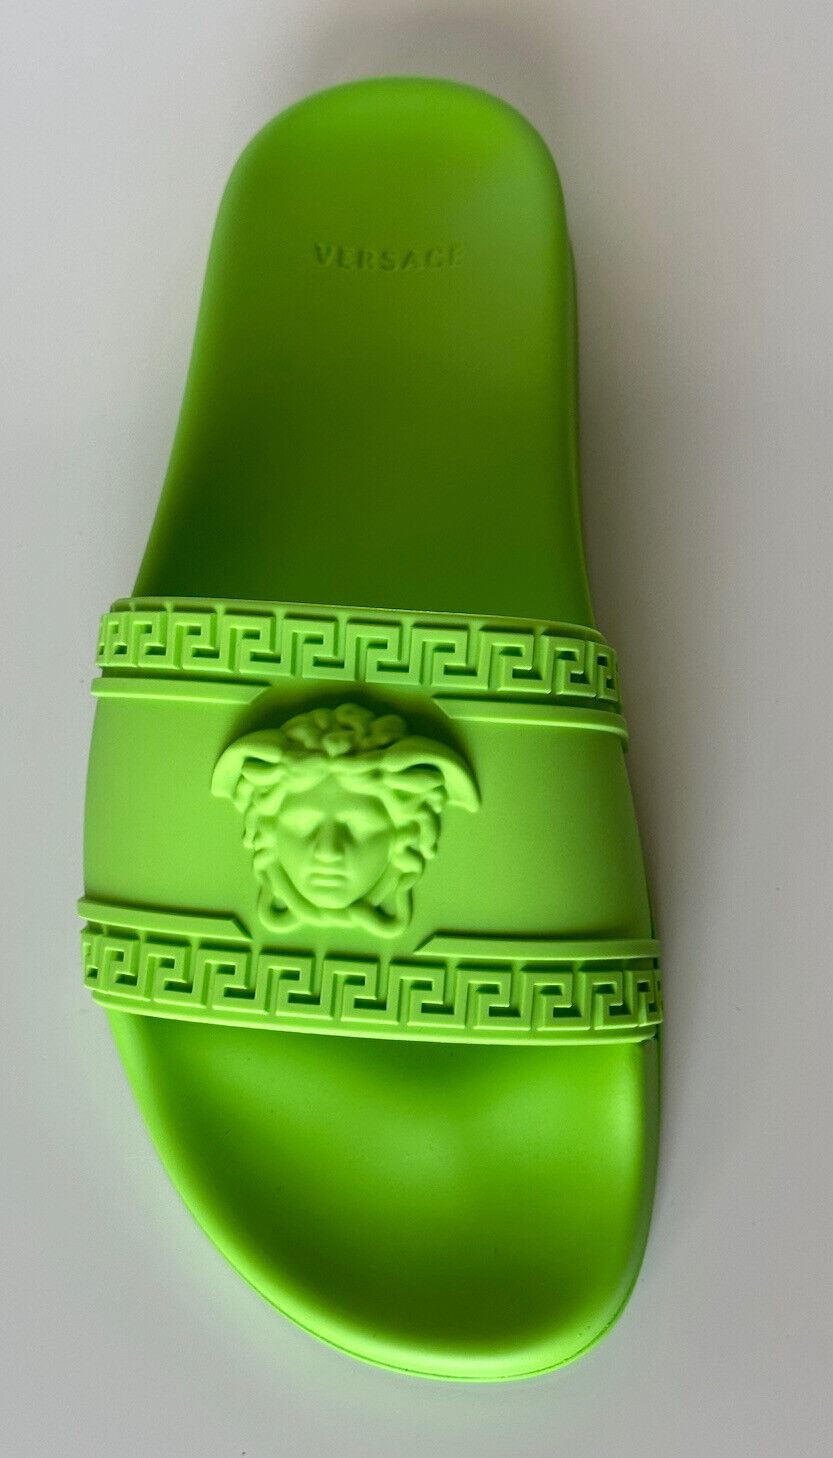 NIB Versace Medusa Head Slides Sandals Neon Green 14 US (47 Euro) DSU5883 Italy